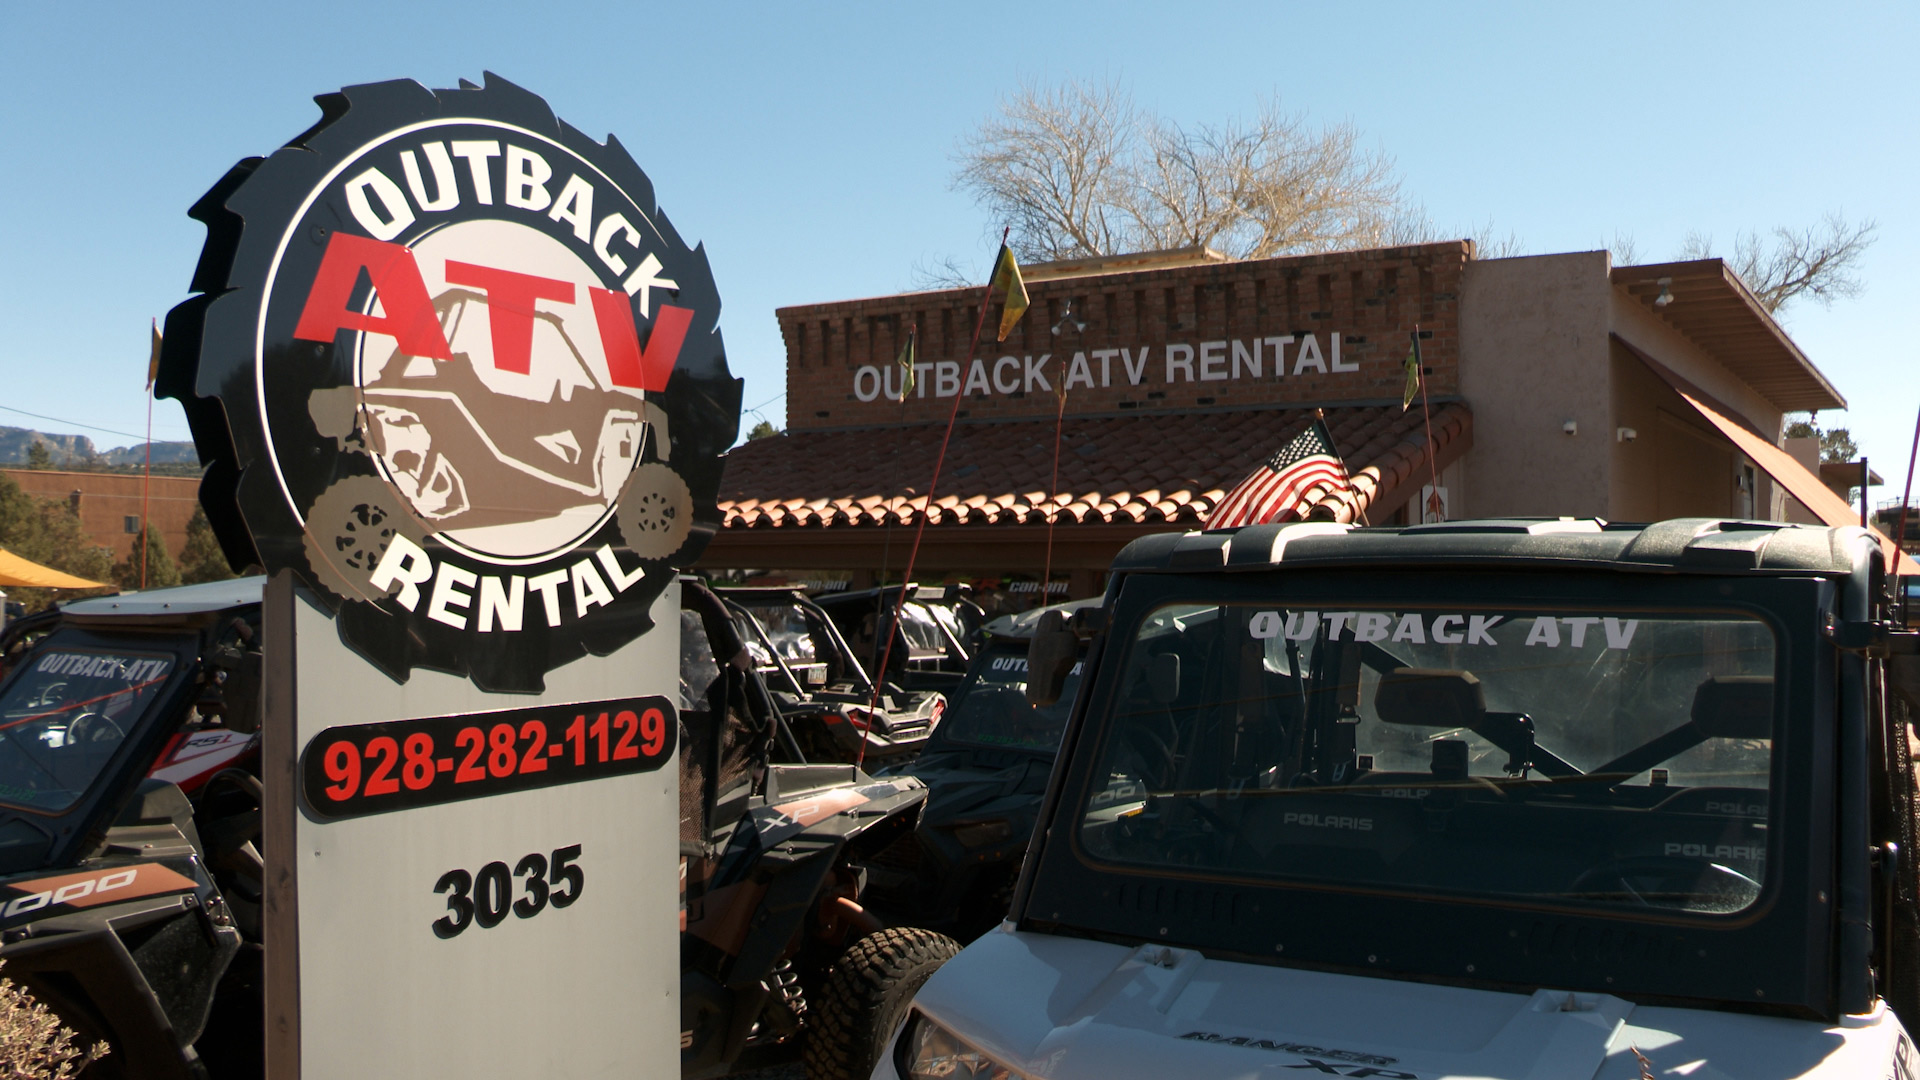 Outback ATV Rentals building in West Sedona, Arizona